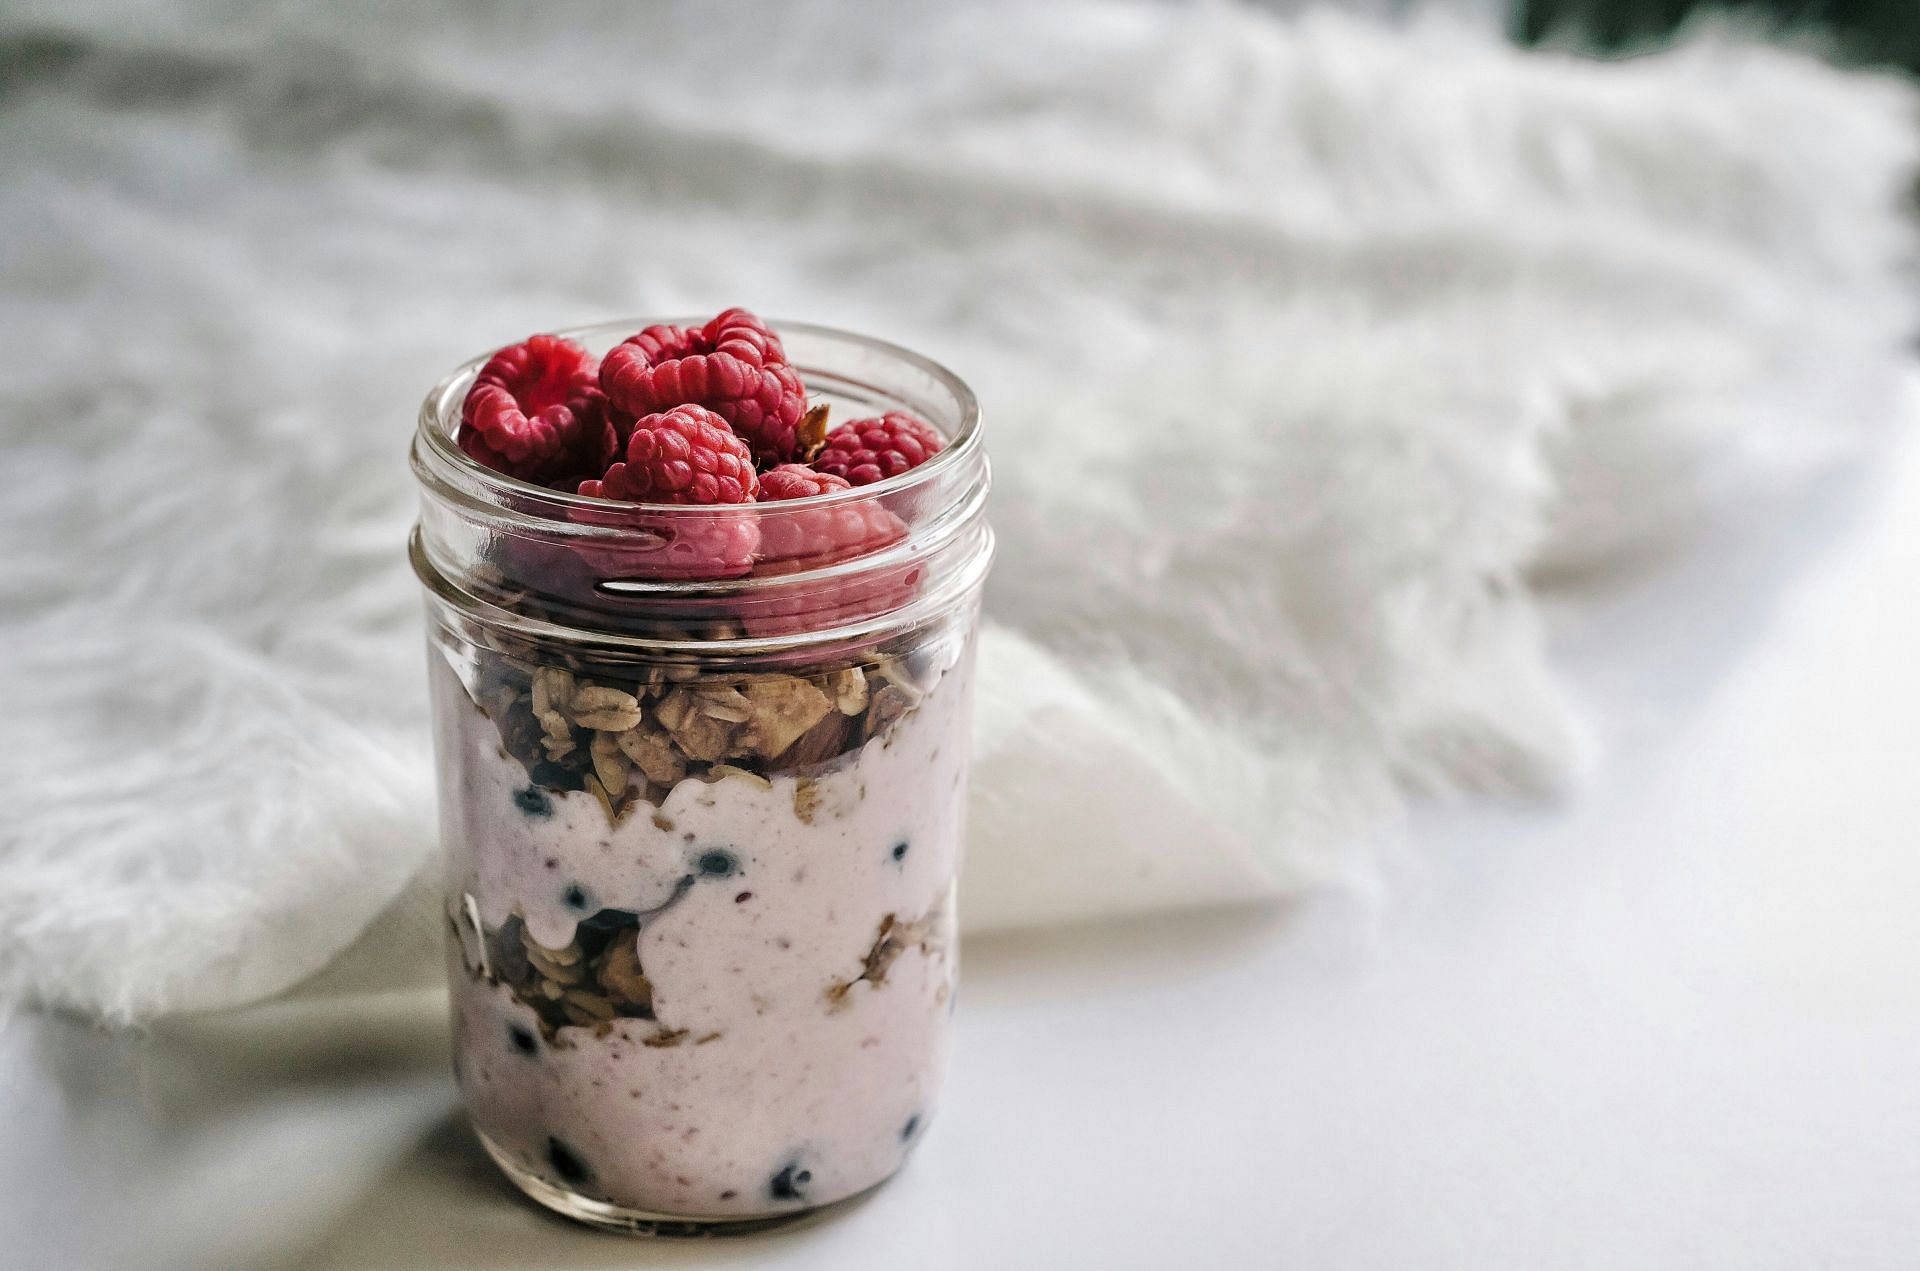 Greek Yogurt is a healthy treat (Image by Alisha Hieb/Unsplash)